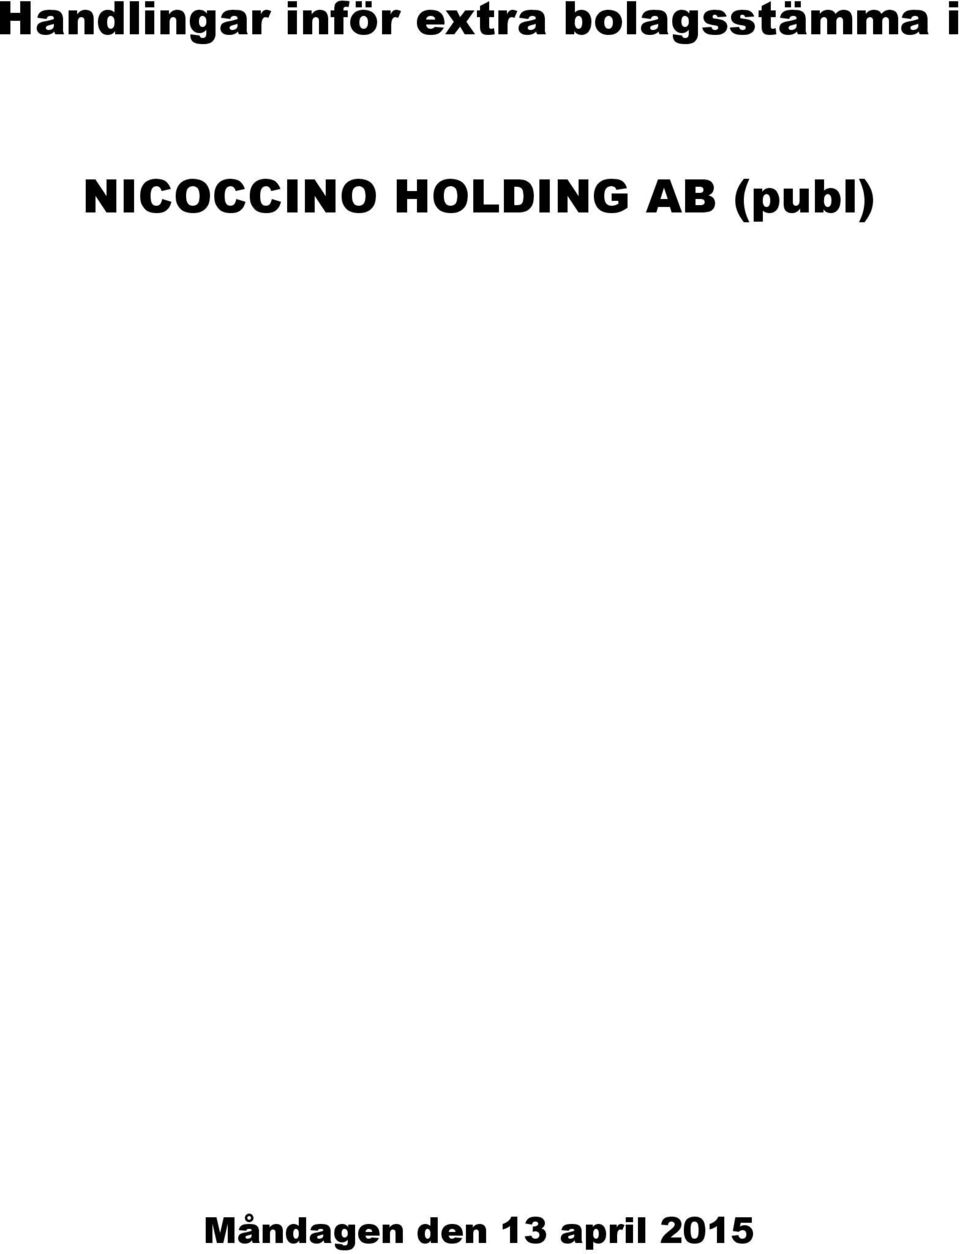 NICOCCINO HOLDING AB